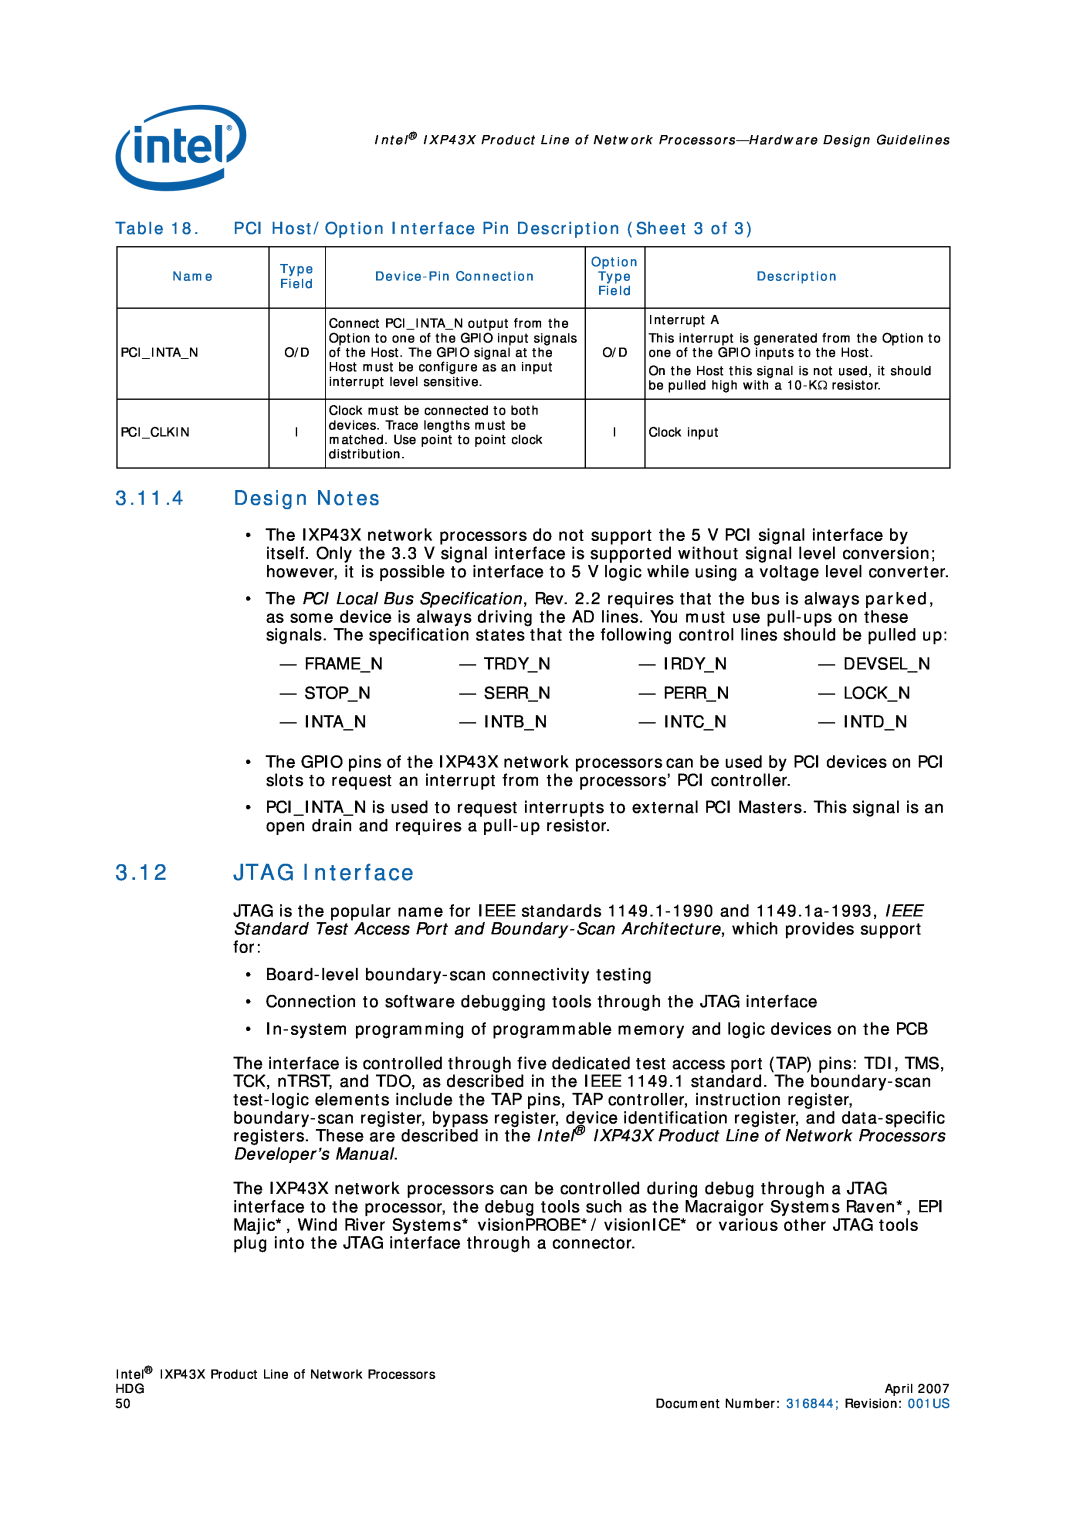 Intel IXP43X manual JTAG Interface, Design Notes, PCI Host/Option Interface Pin Description Sheet 3 of 